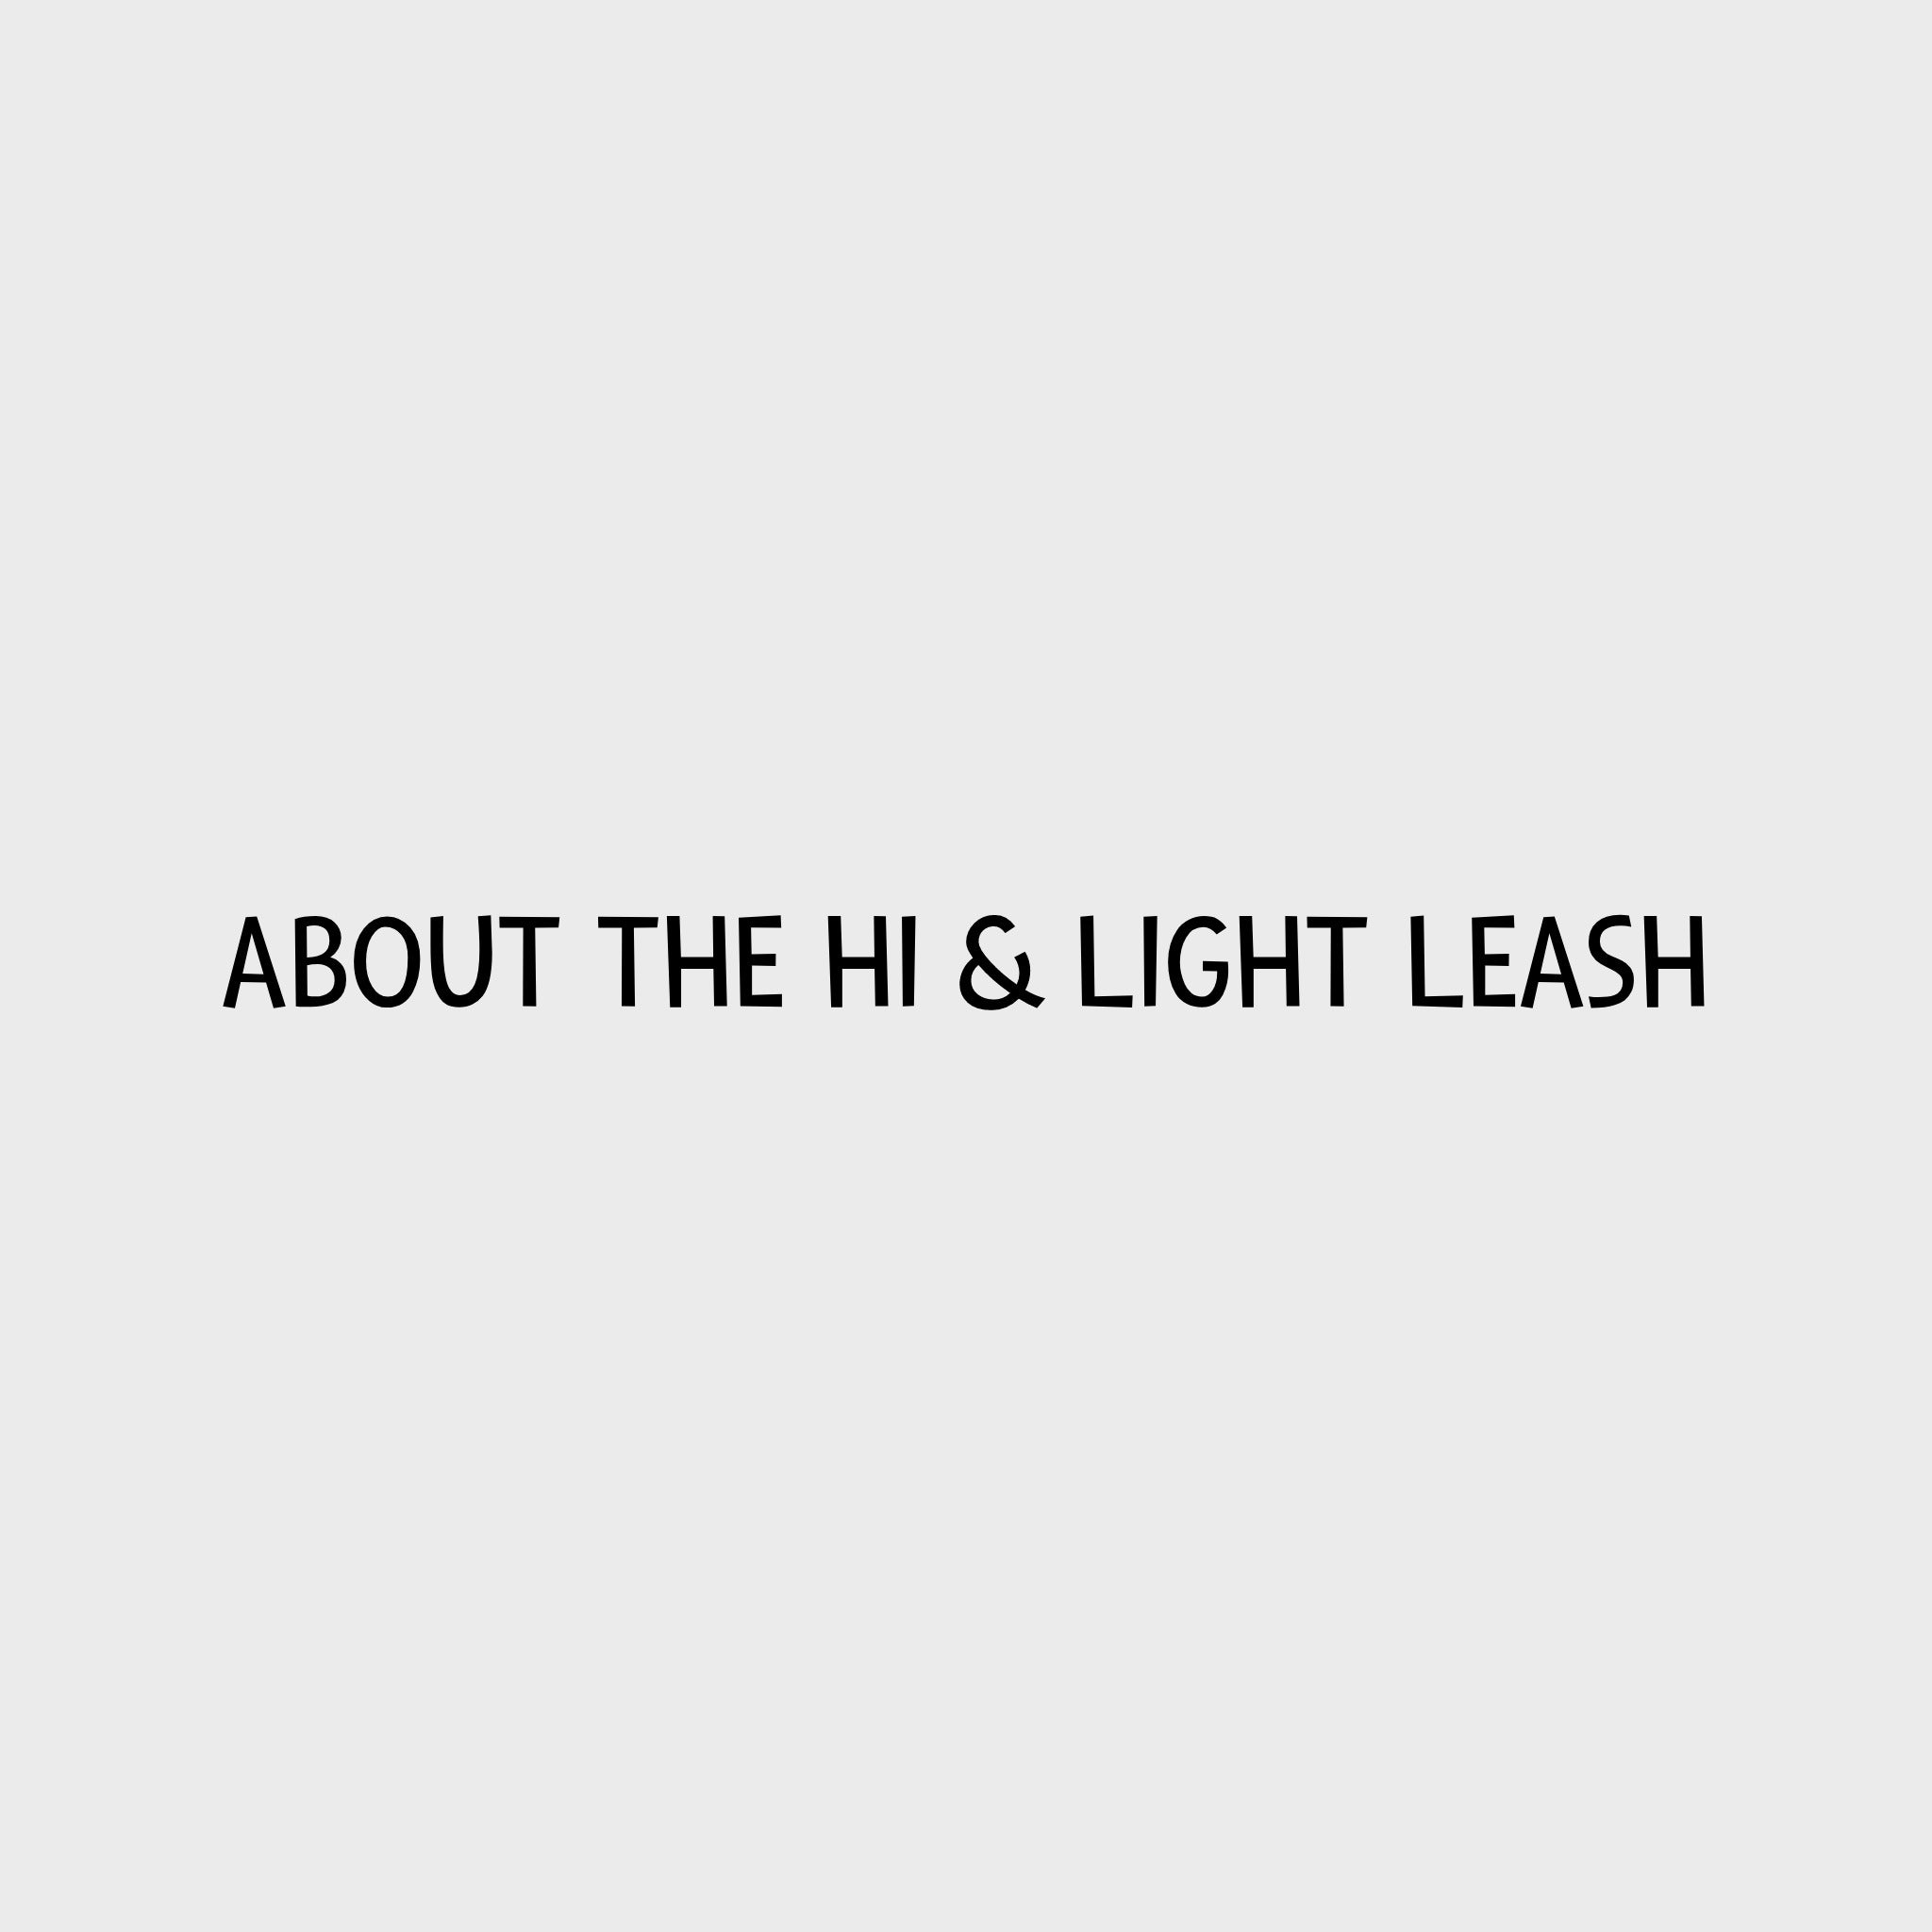 Video - Ruffwear Hi & Light Leash